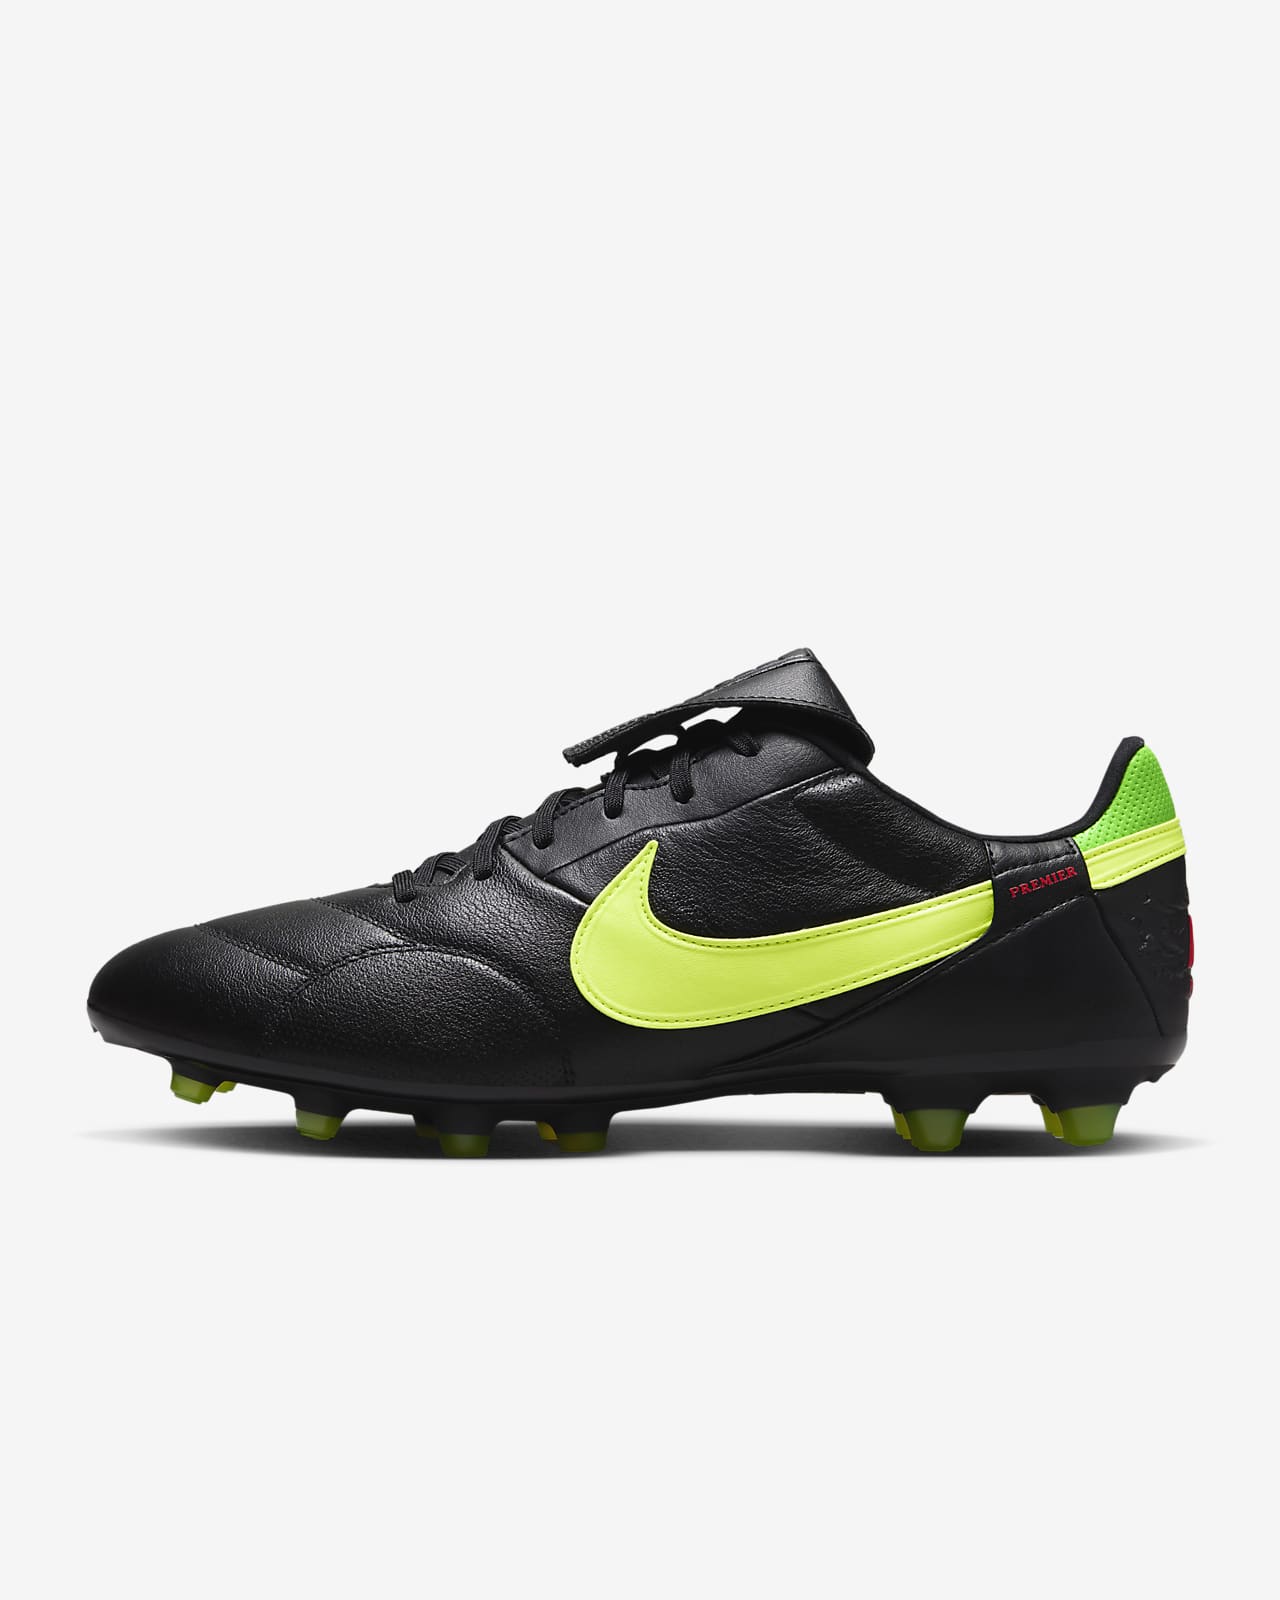 Nike Premier 3 FG Low-Top Football Boot